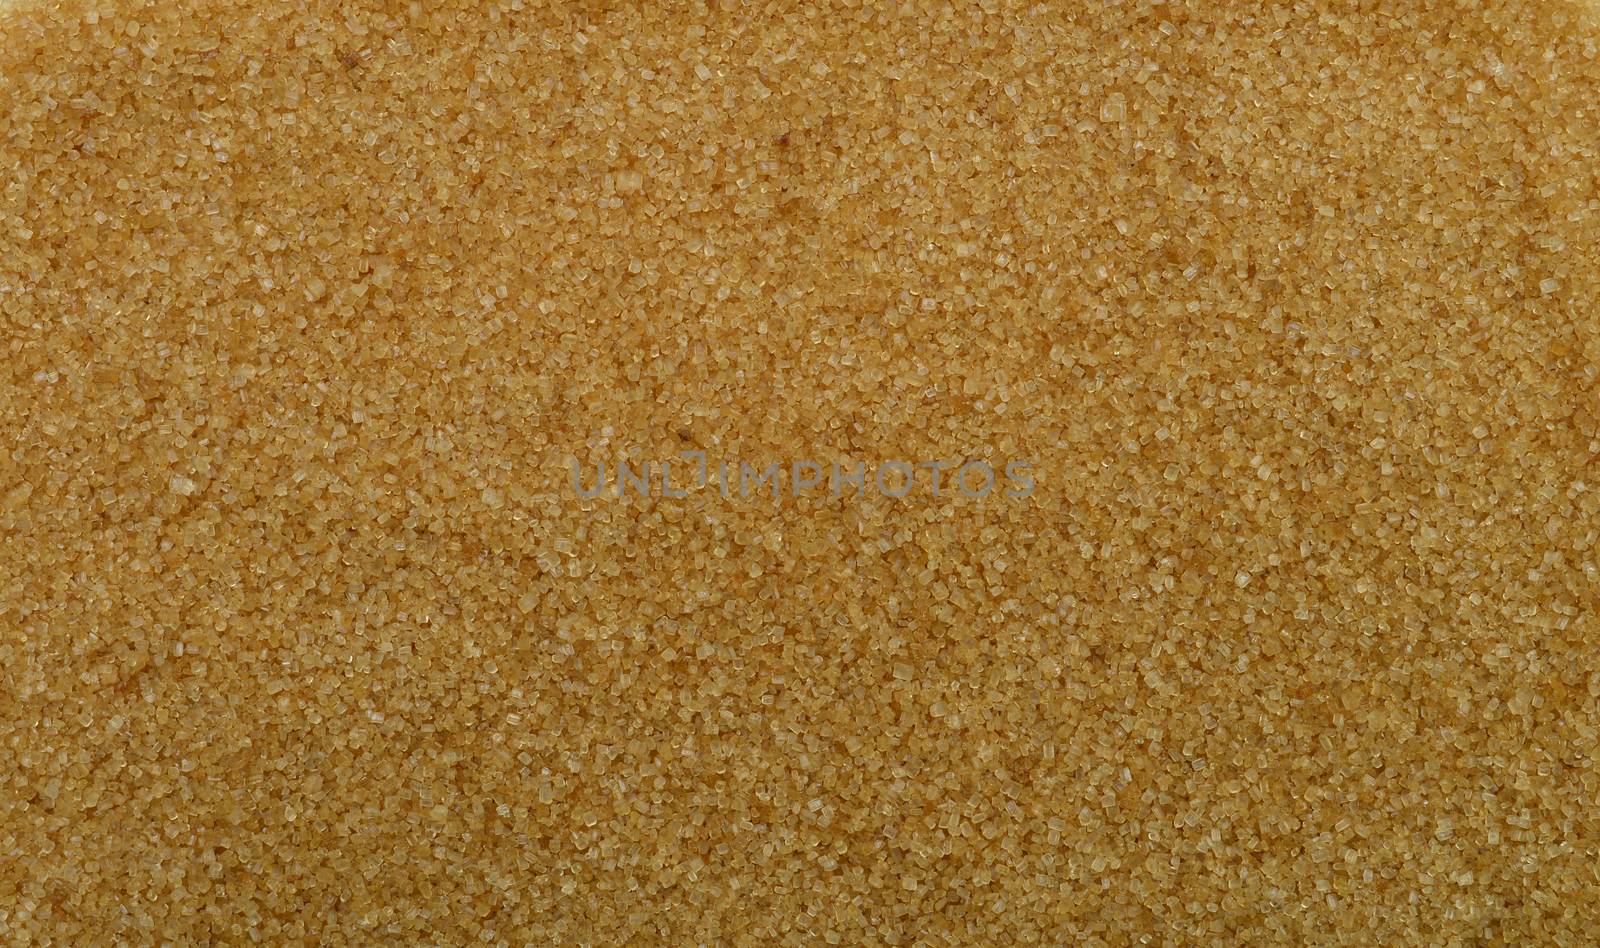 brown sugar crystal macro texture pattern background